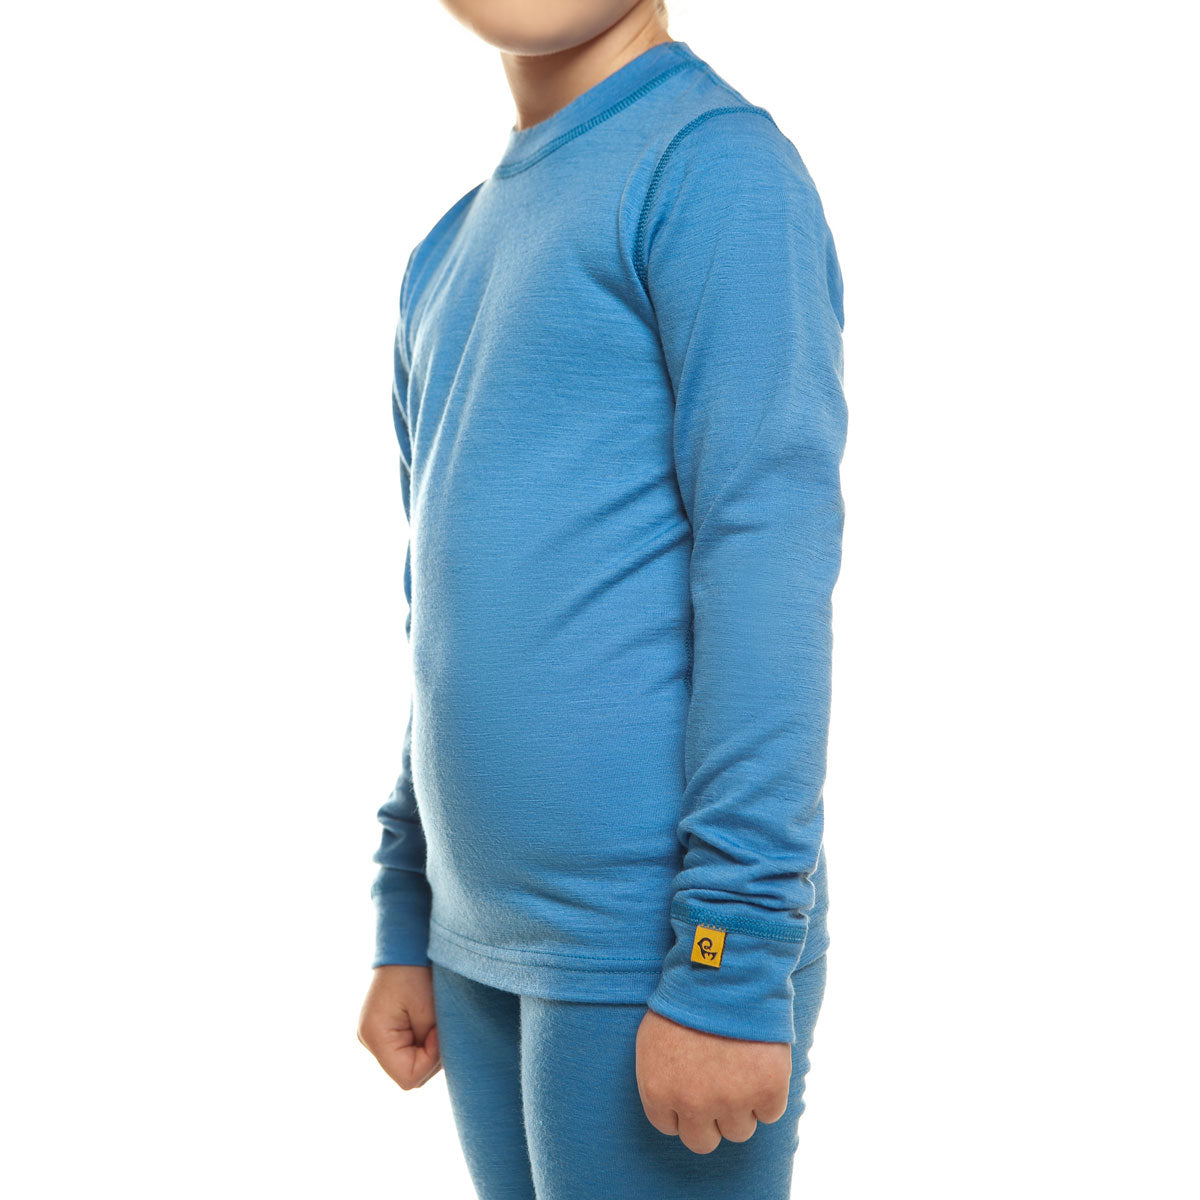 MENIQUE Long Sleeve Crew 100% Merino Wool Kids Shirt Light Blue